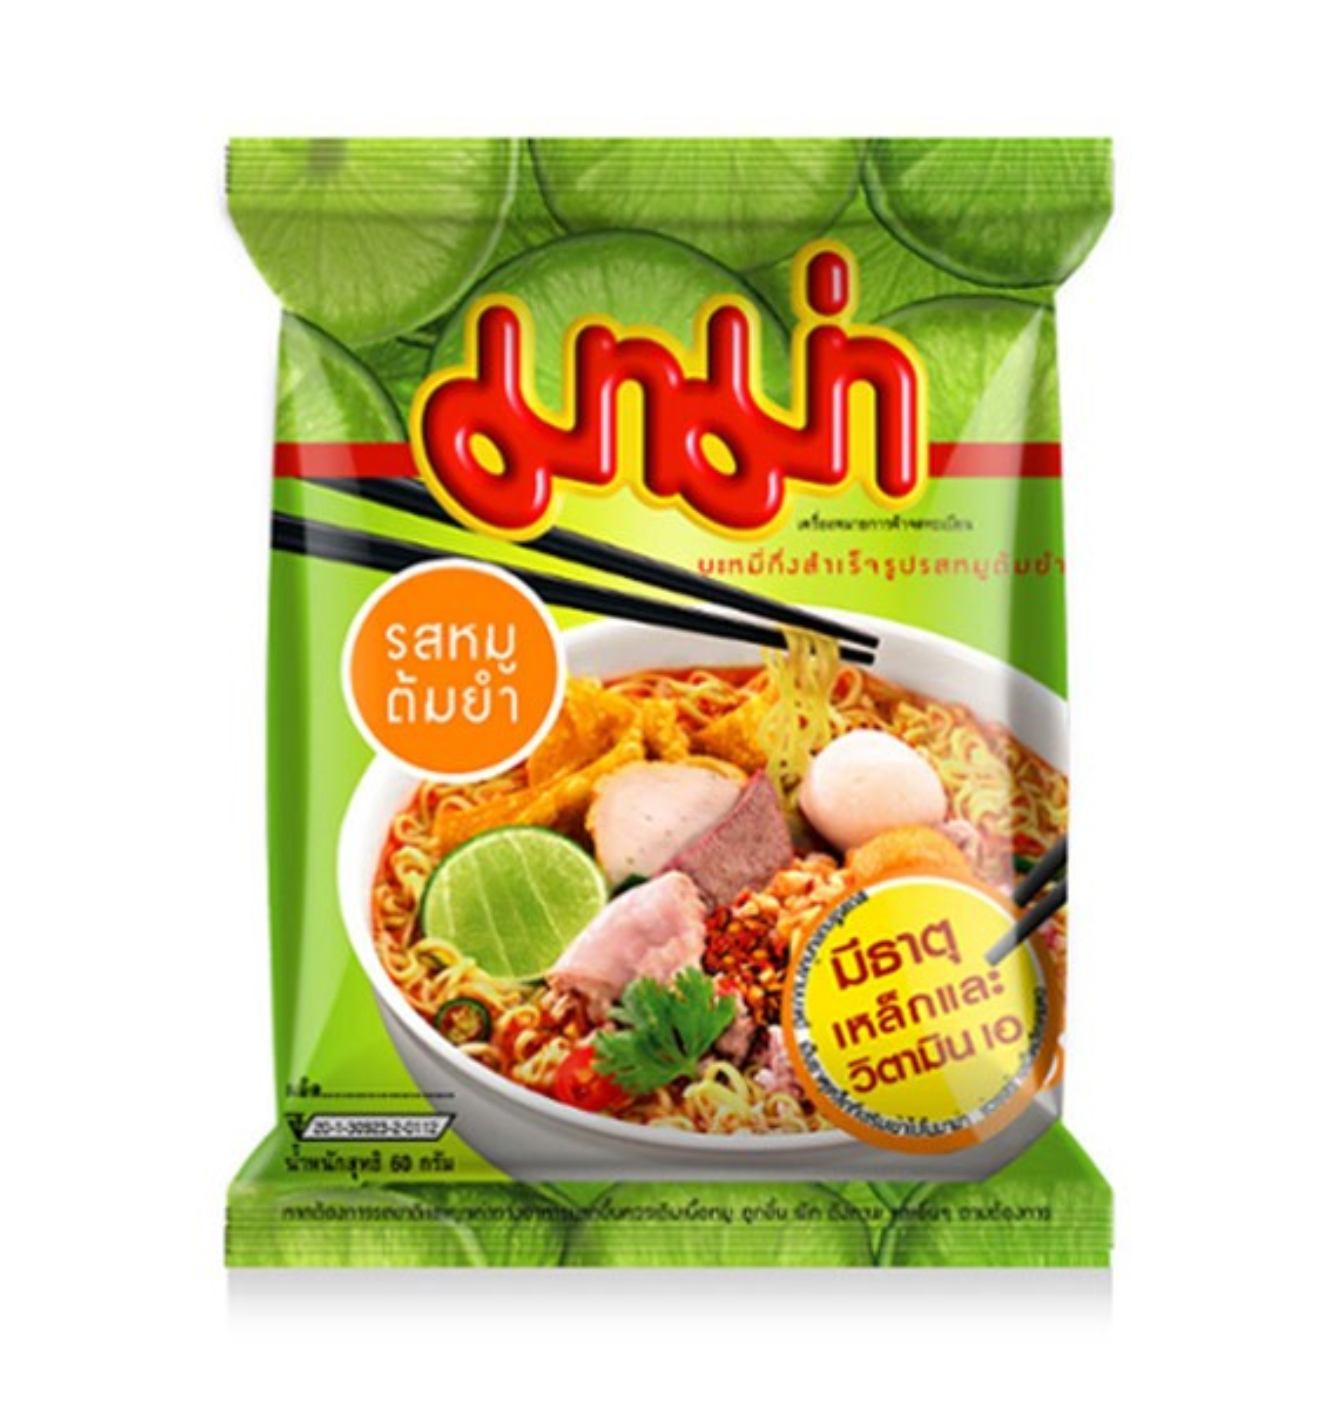 Noodle tom yum pork flavor (媽媽冬蔭豬肉麵)